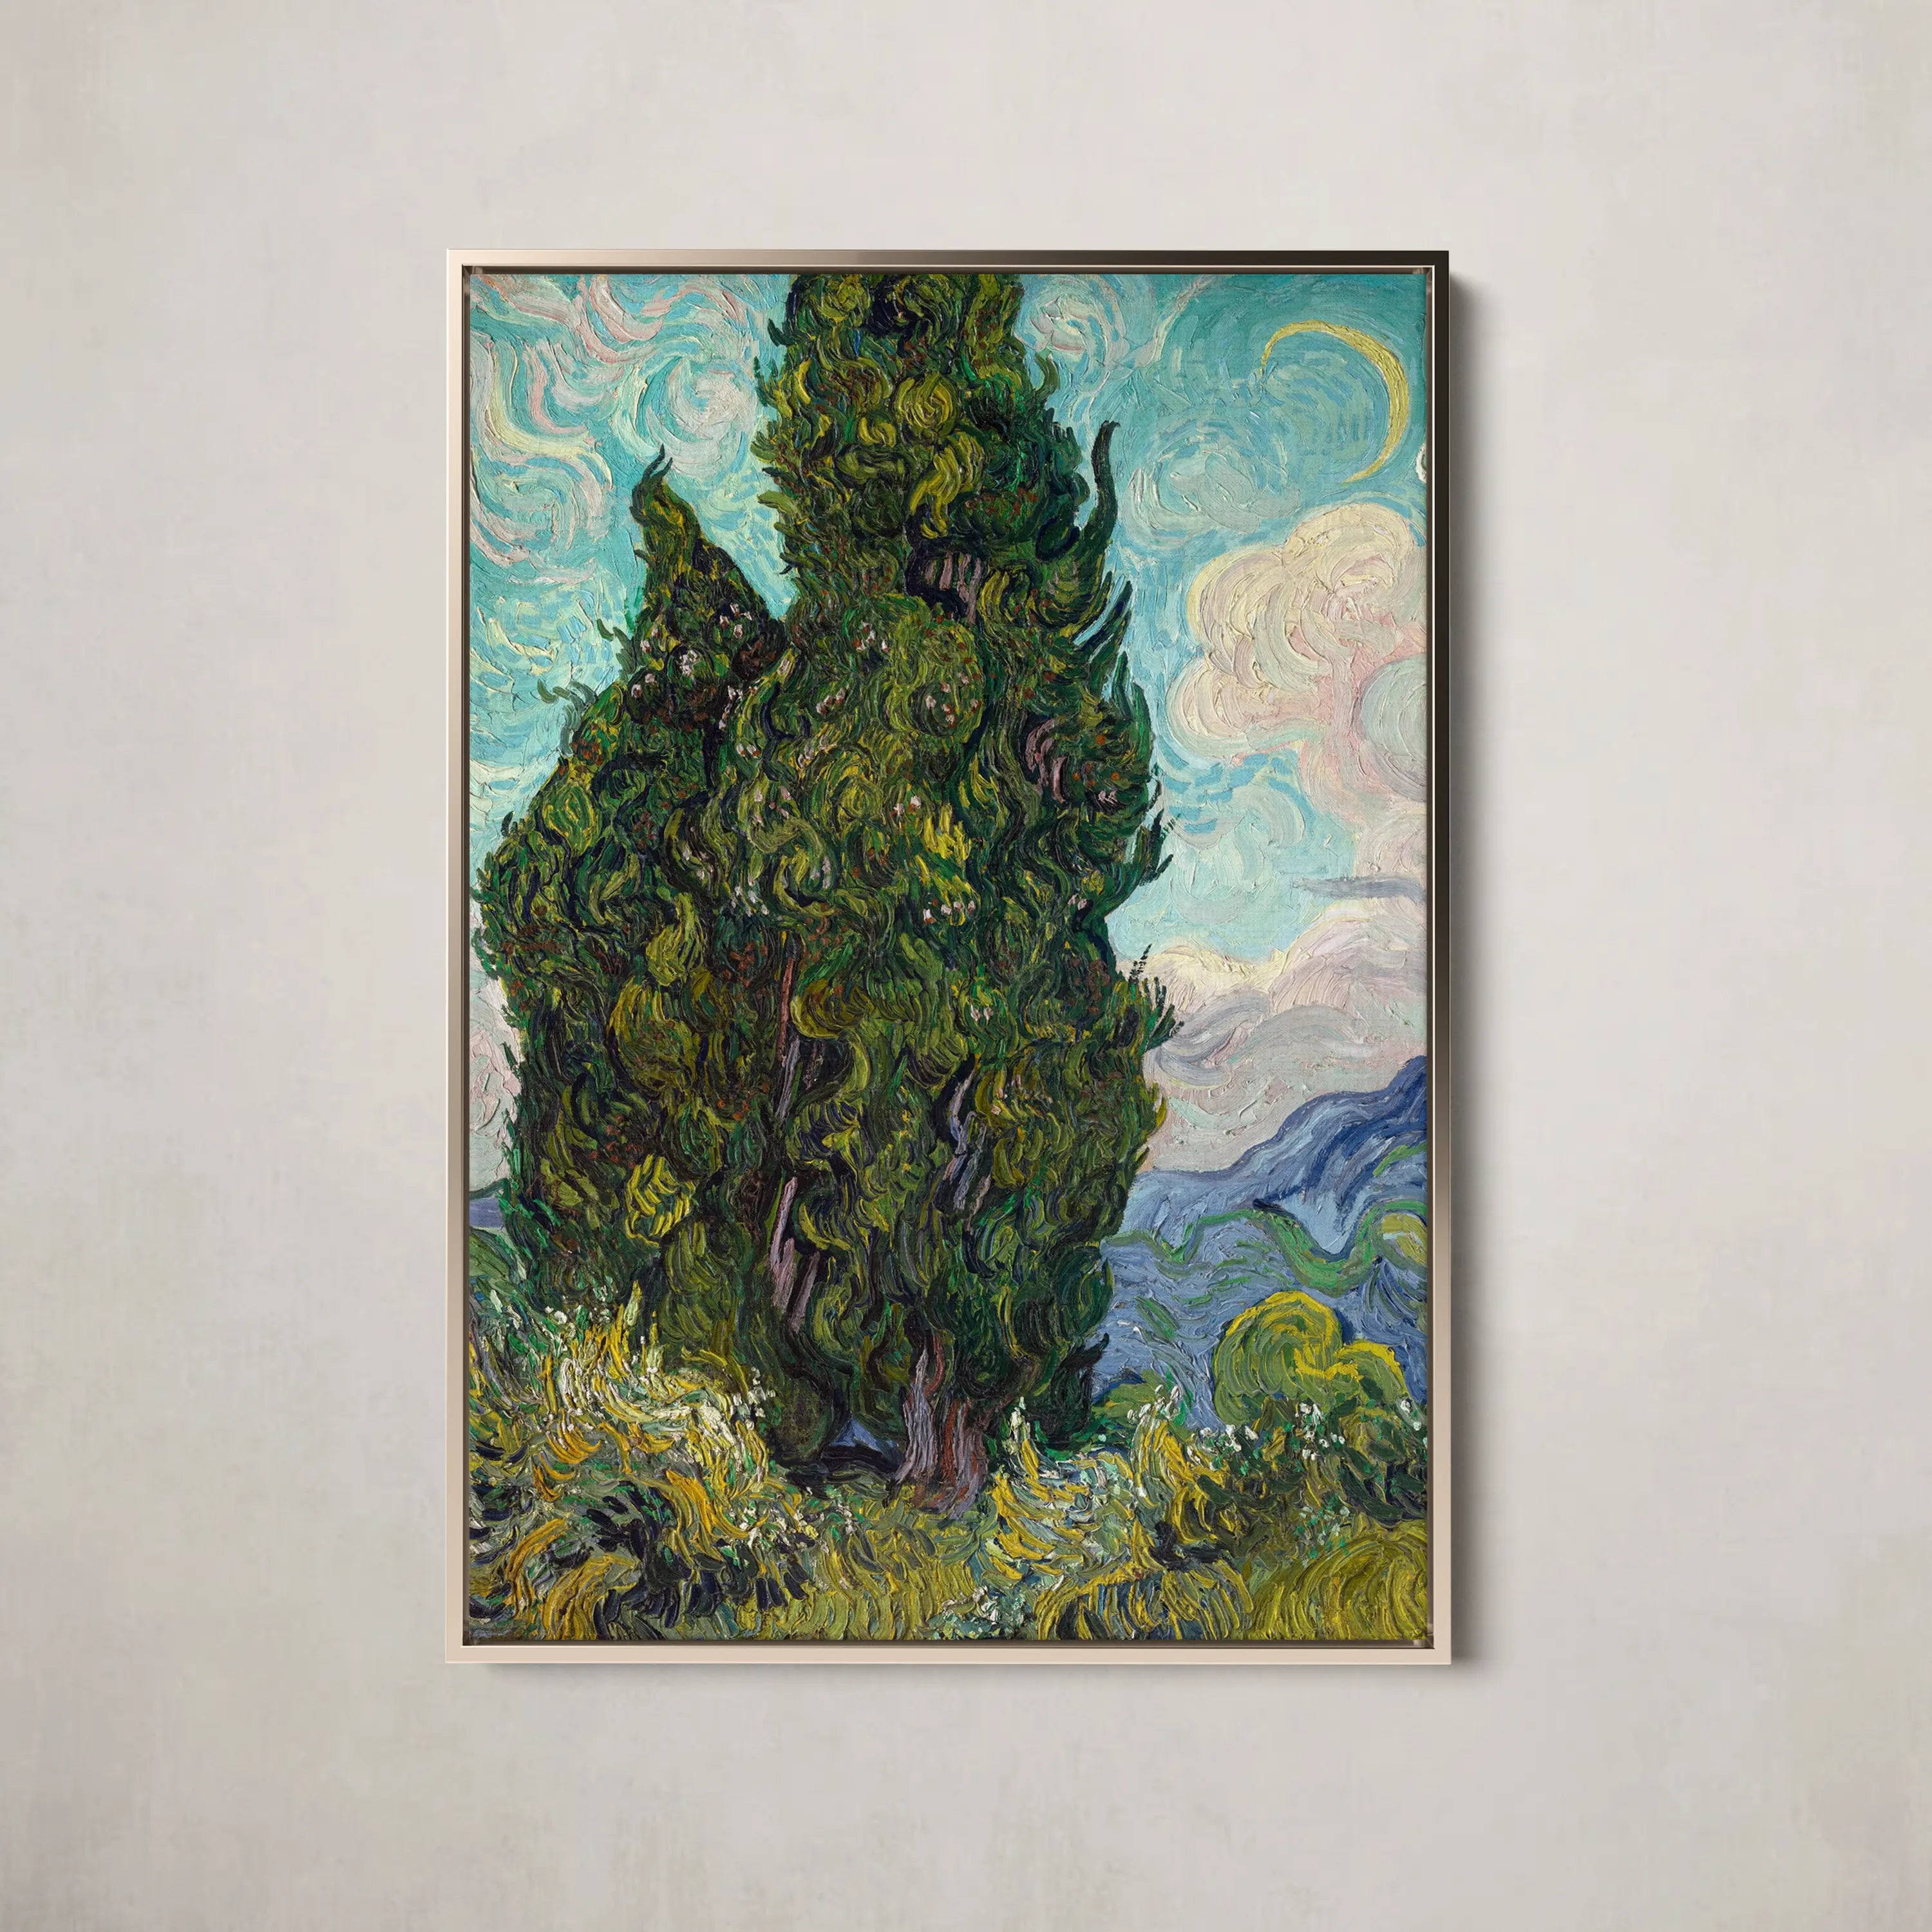 Cypresses (1889) by Vincent van Gogh